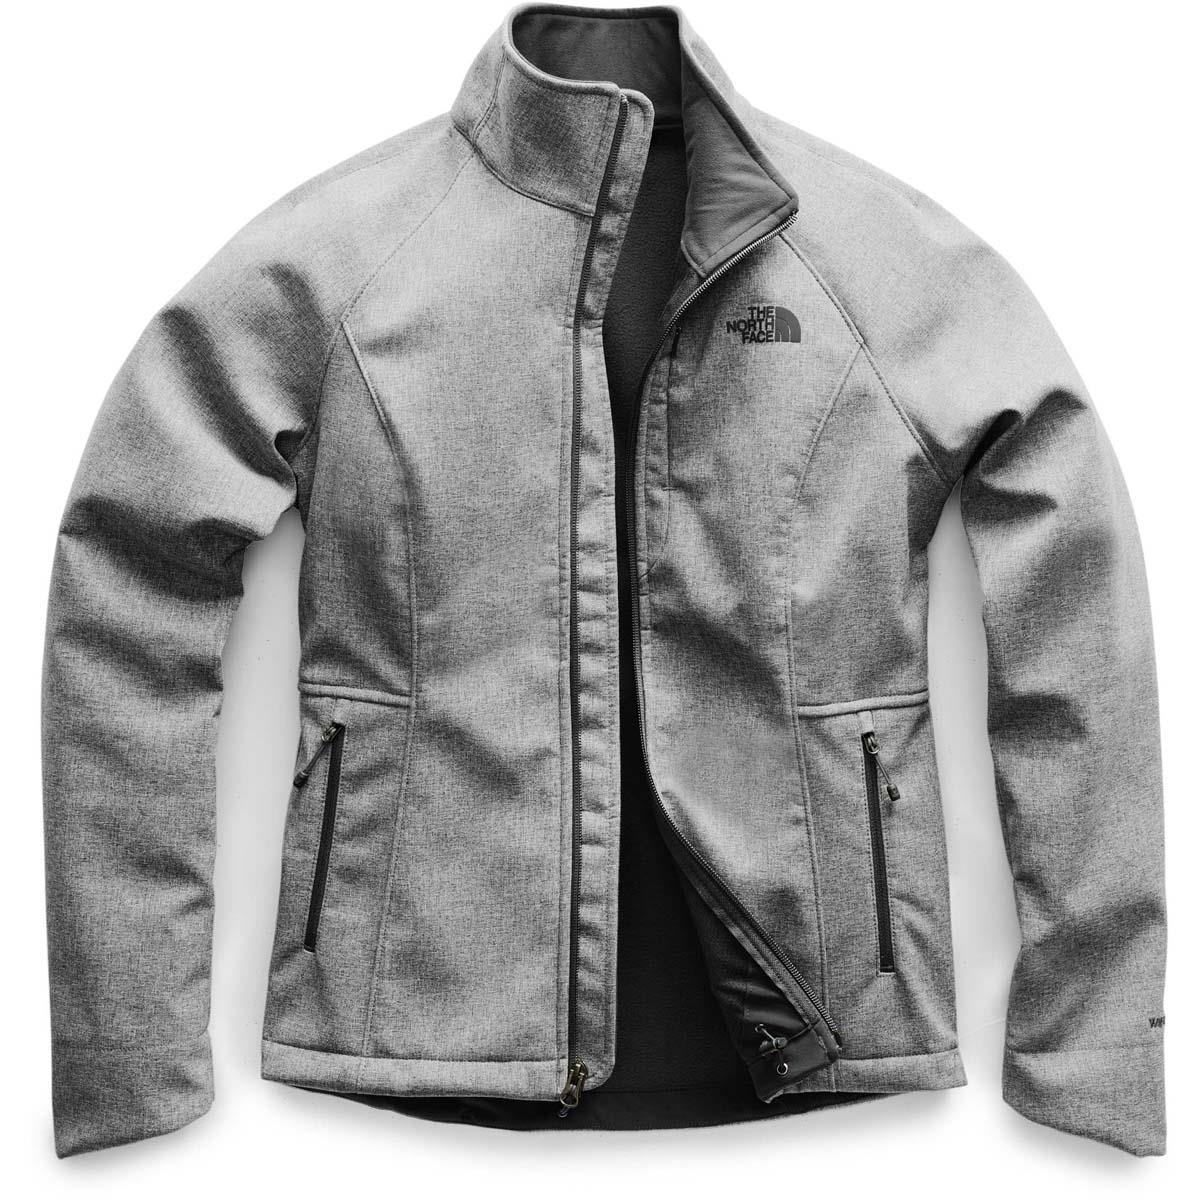 mens apex bionic 2 jacket updated design